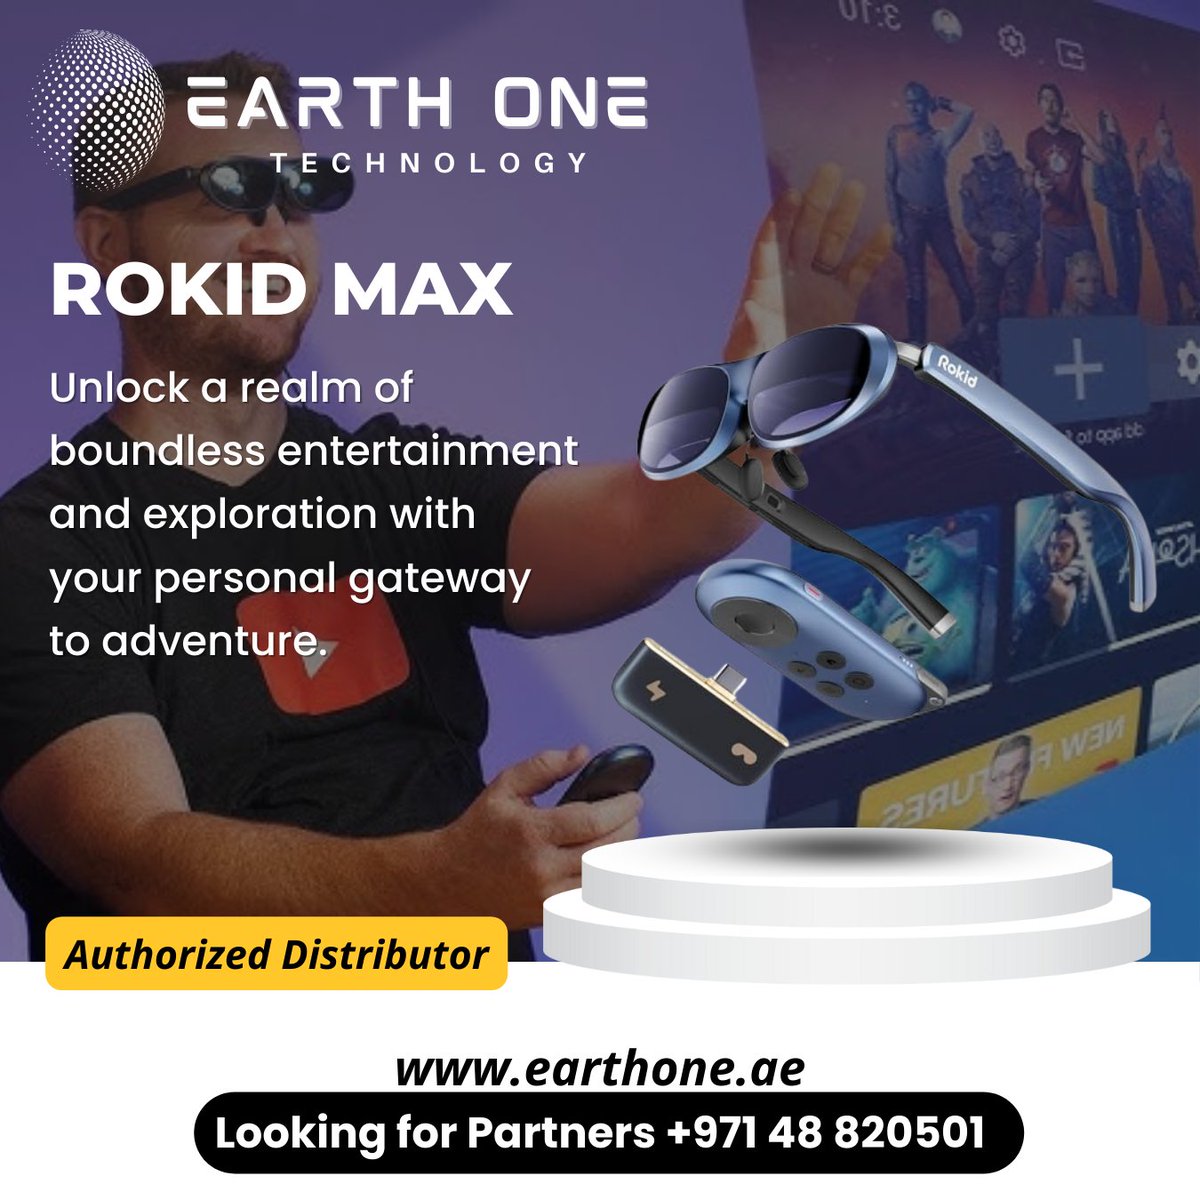 #earthone Rokid Max AR glasses

smpl.is/8oxt5

#earthonedubai #smarttech #dubaitech #earthonetec #earthonetech #gcc #arglasses #rokidmax #rokidmaxglasses #rokidglasses